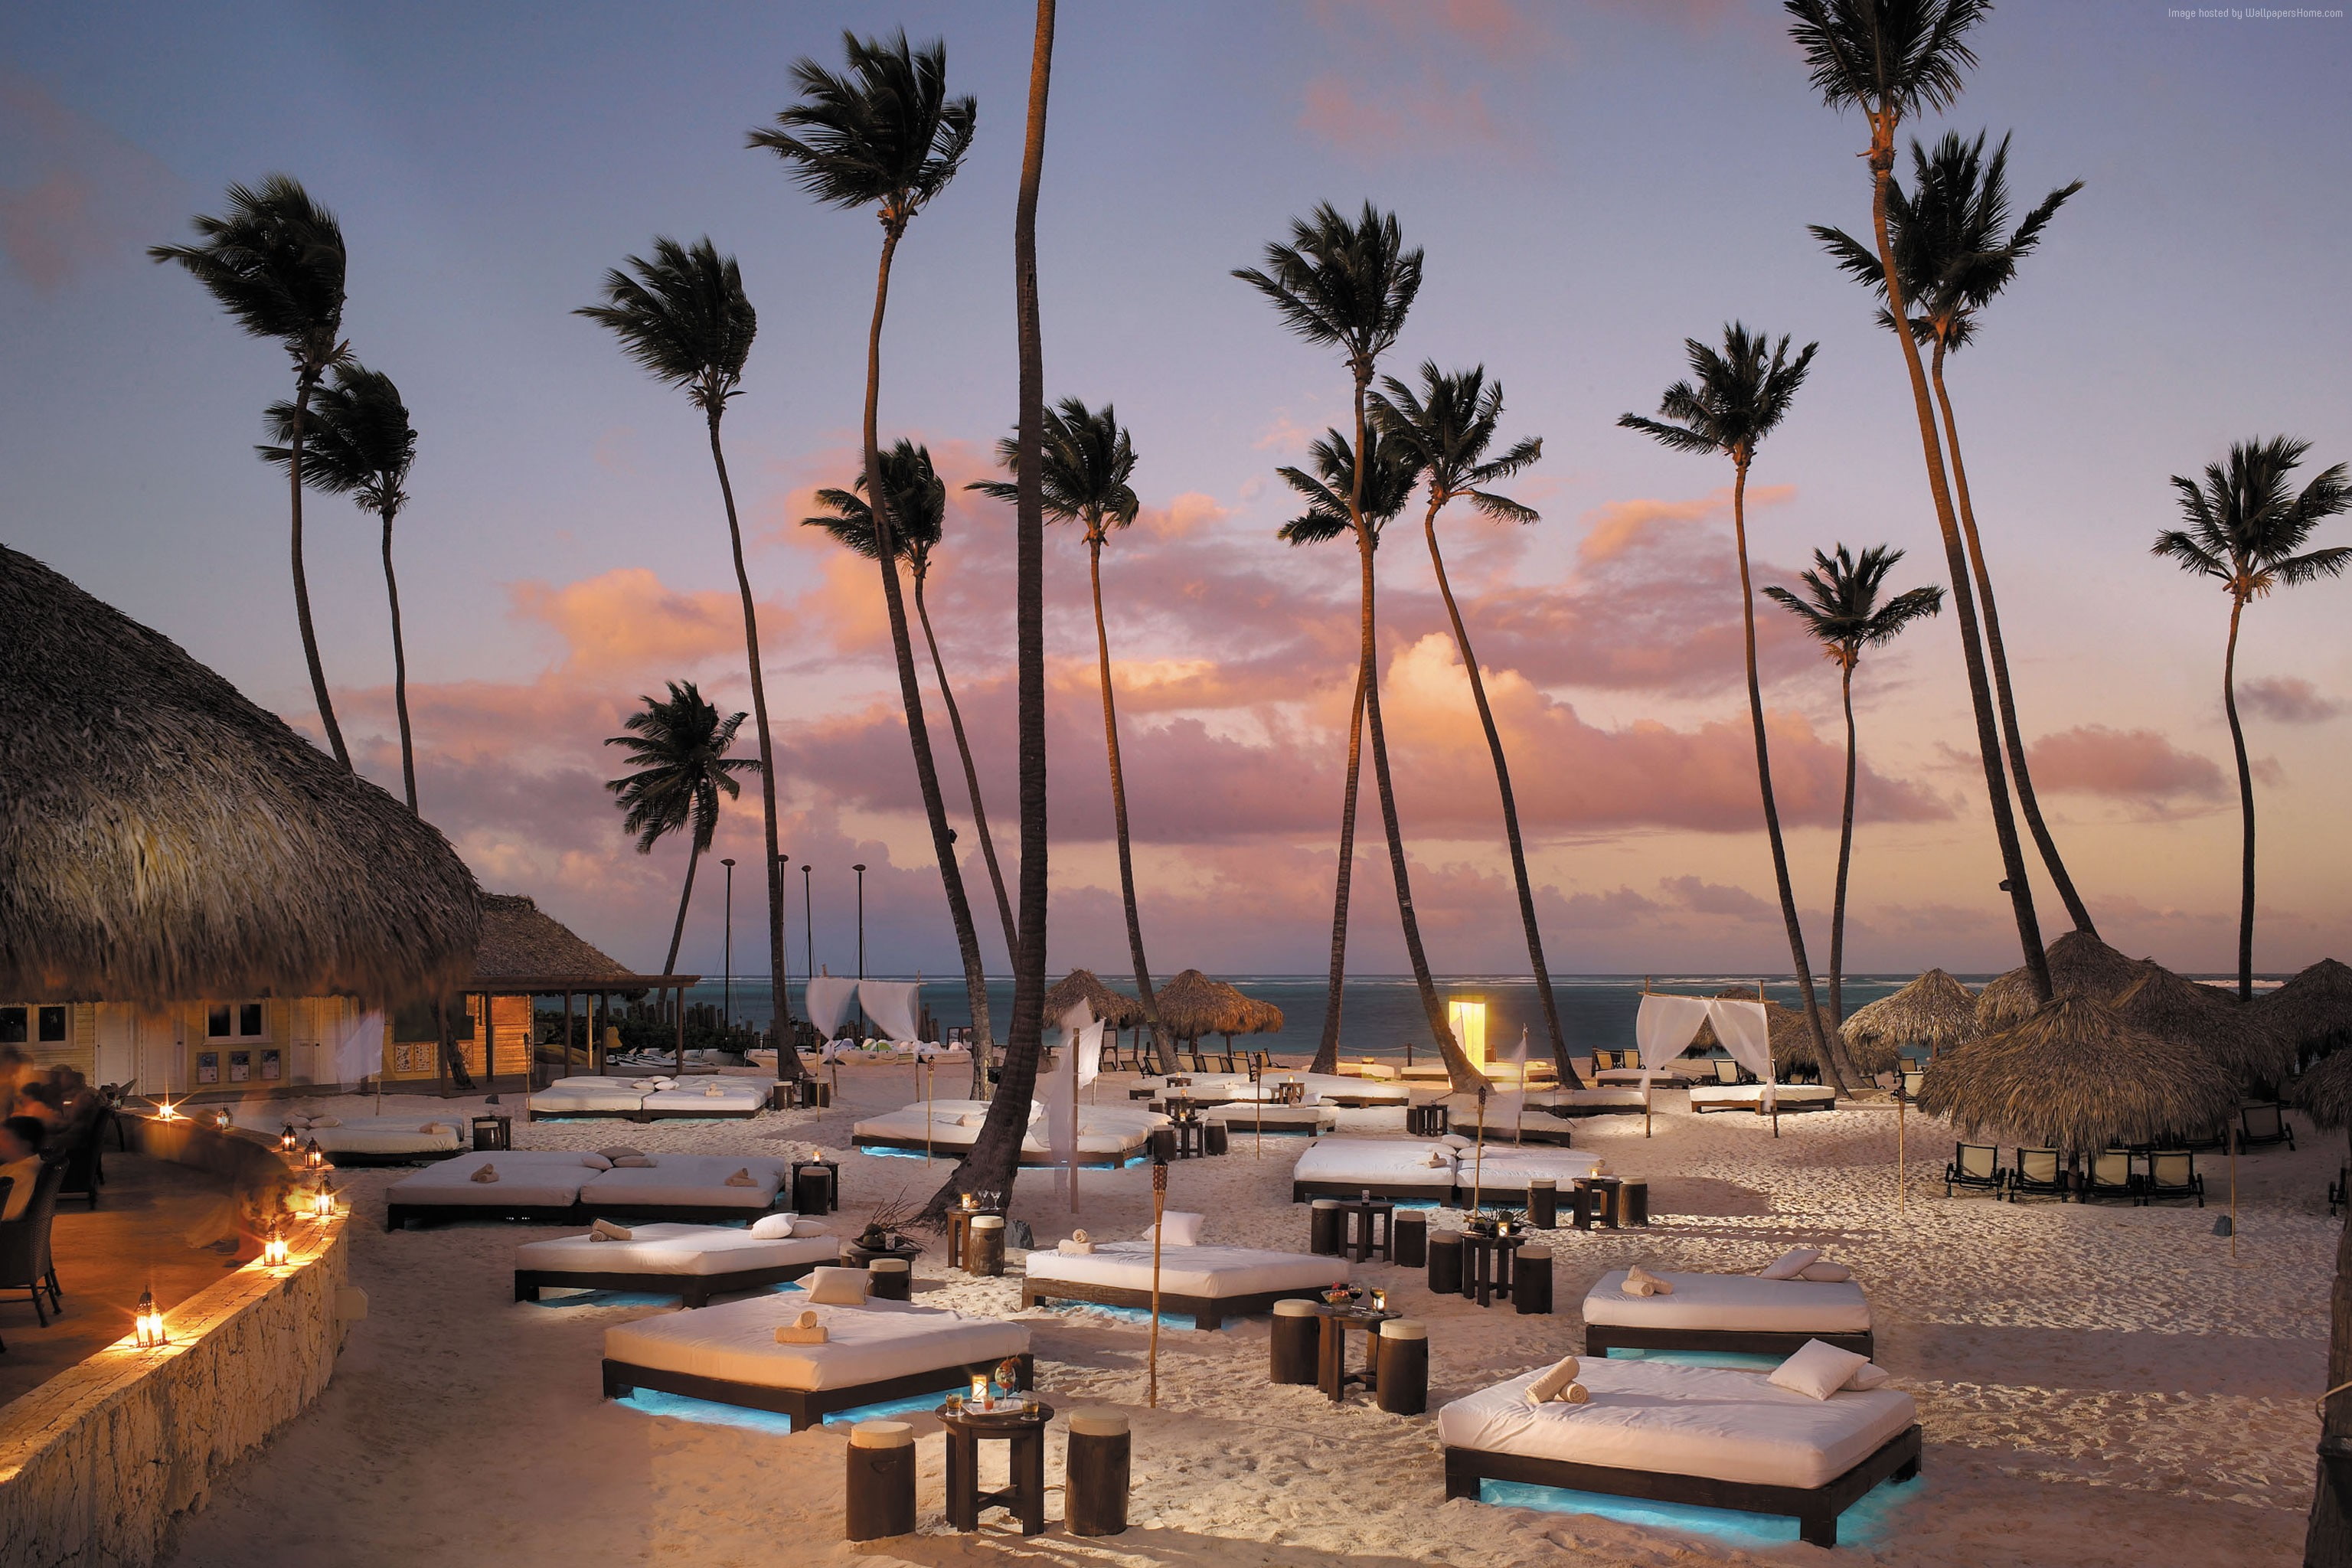 Best Hotels of 2017, Paradisus Palma Real, travel, sunset, resort